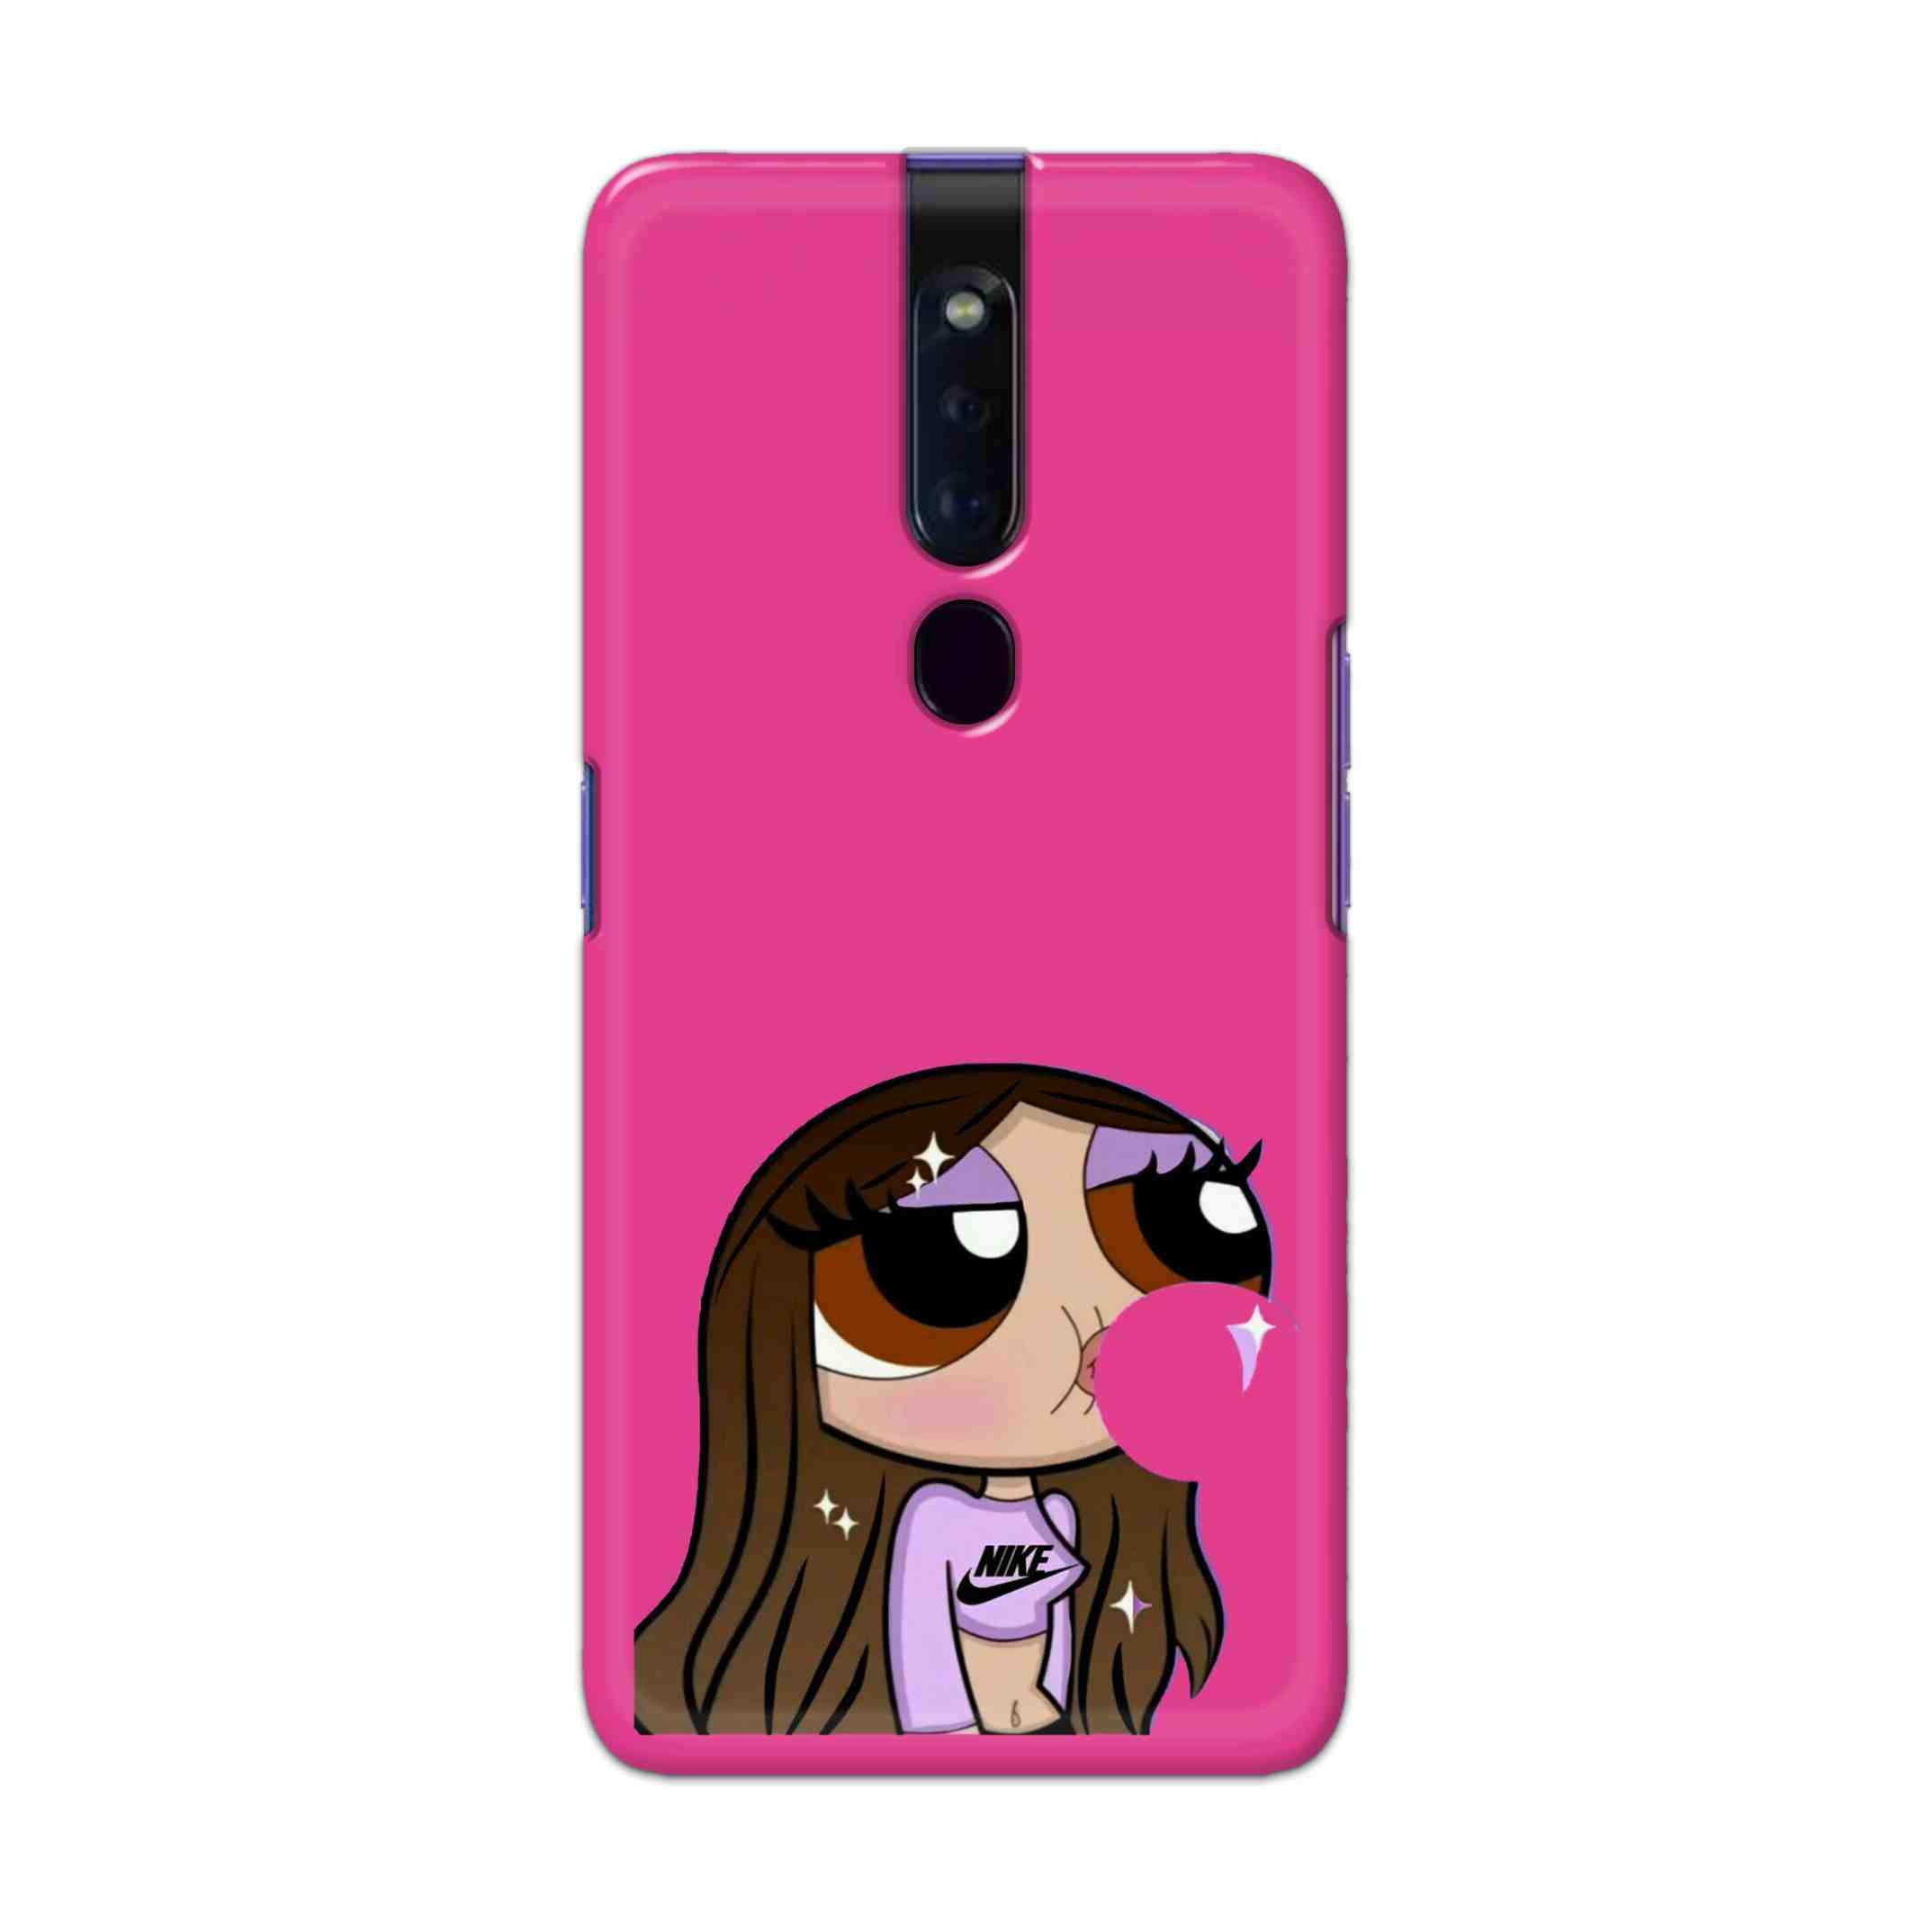 Buy Bubble Girl Hard Back Mobile Phone Case Cover For Oppo F11 Pro Online